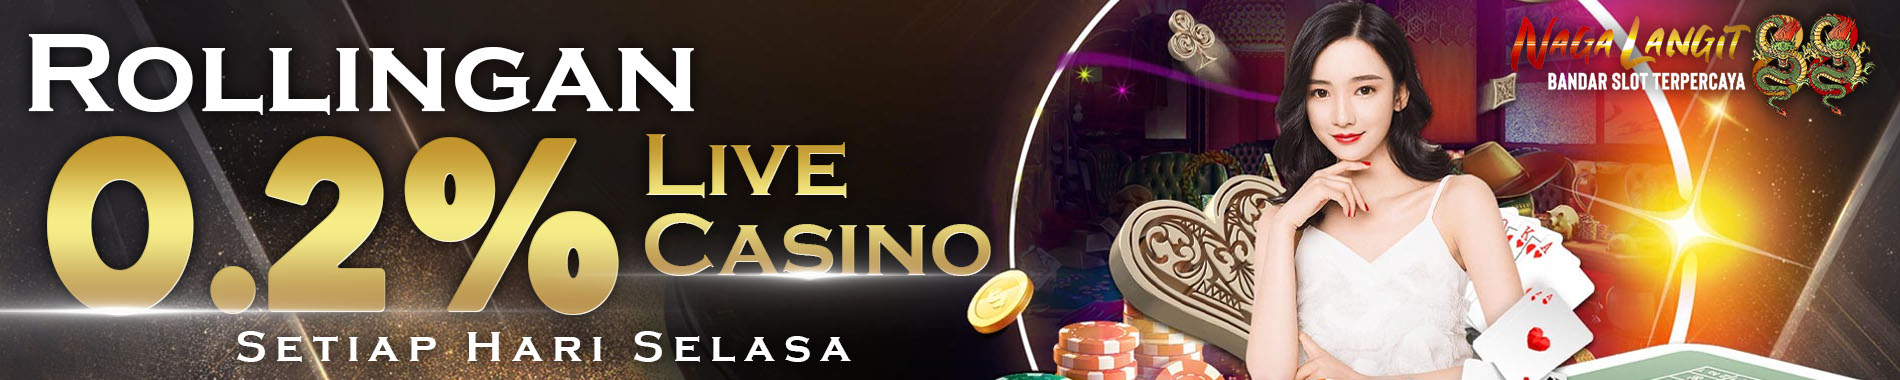 rolingan casino 0.2%